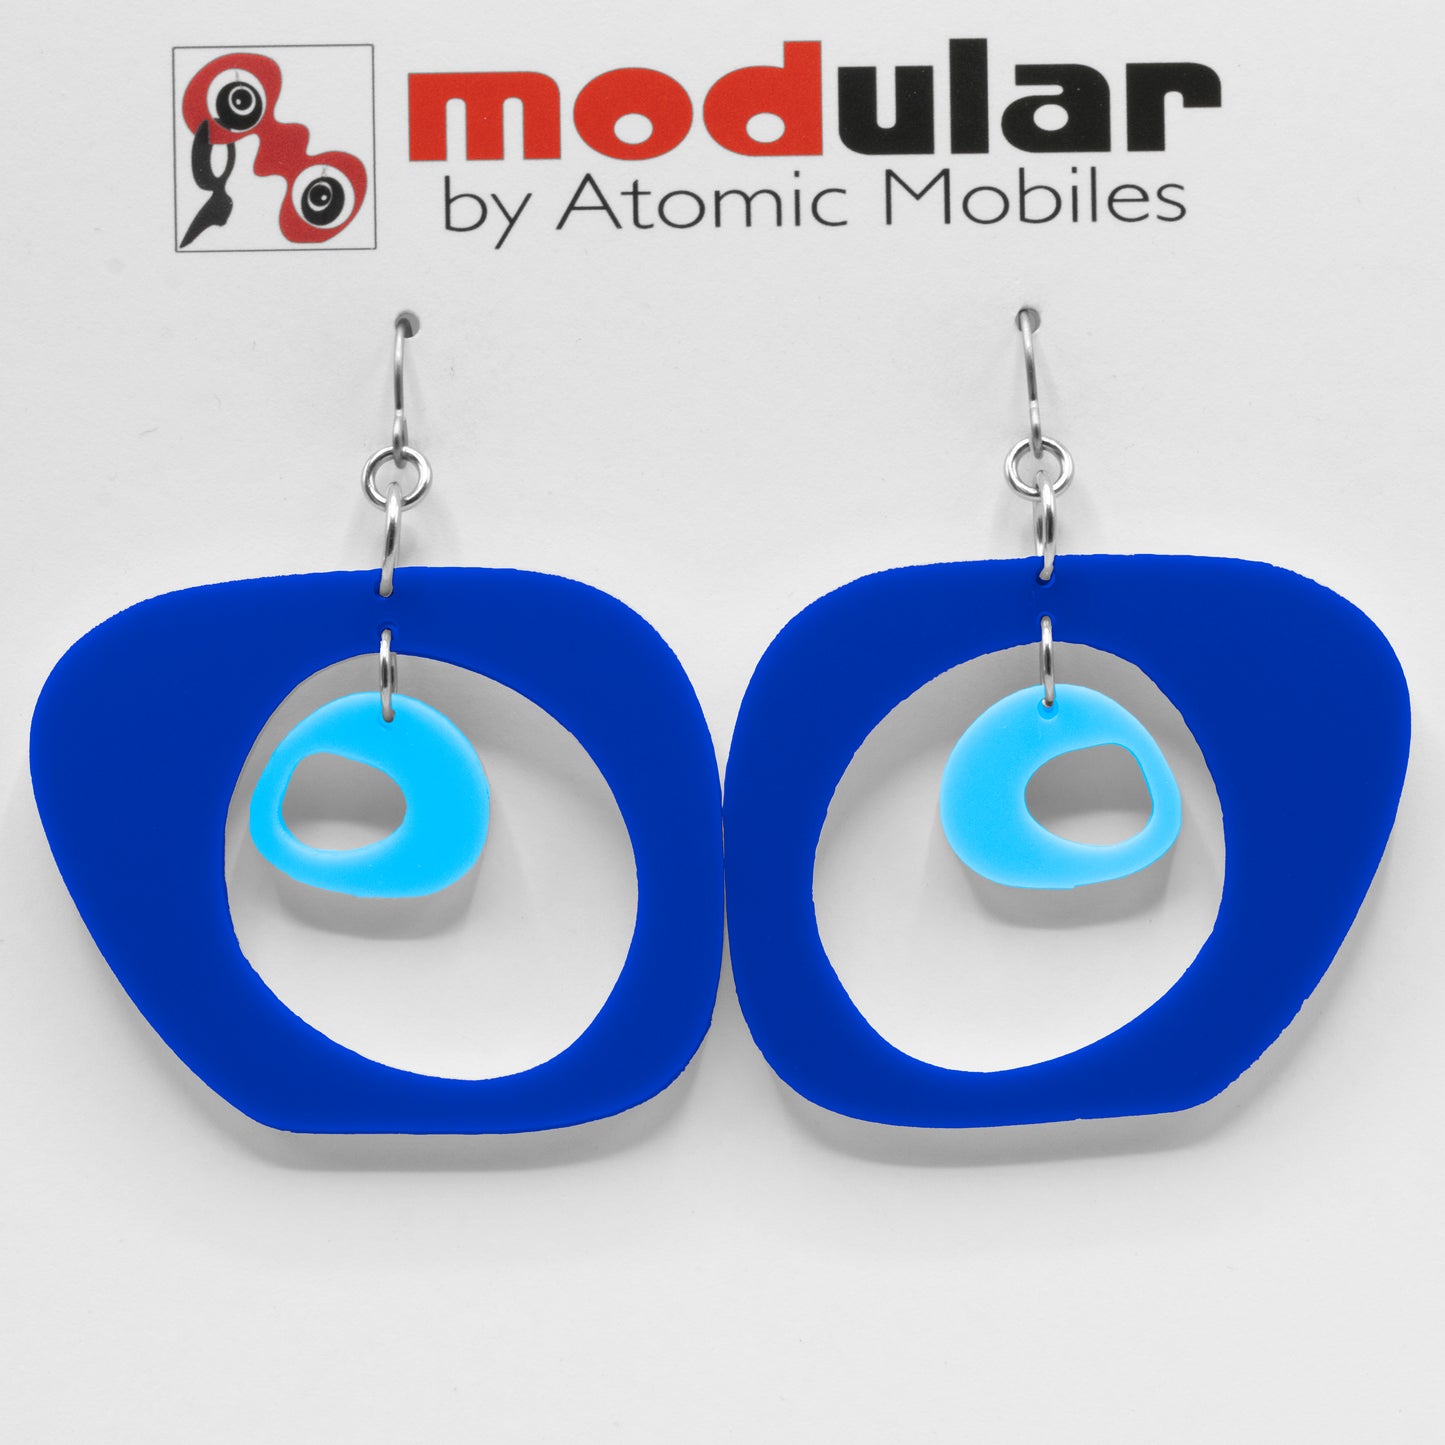 MODular Earrings - Paris Statement Earrings in Navy Blue by AtomicMobiles.com - retro era inspired mod handmade jewelry